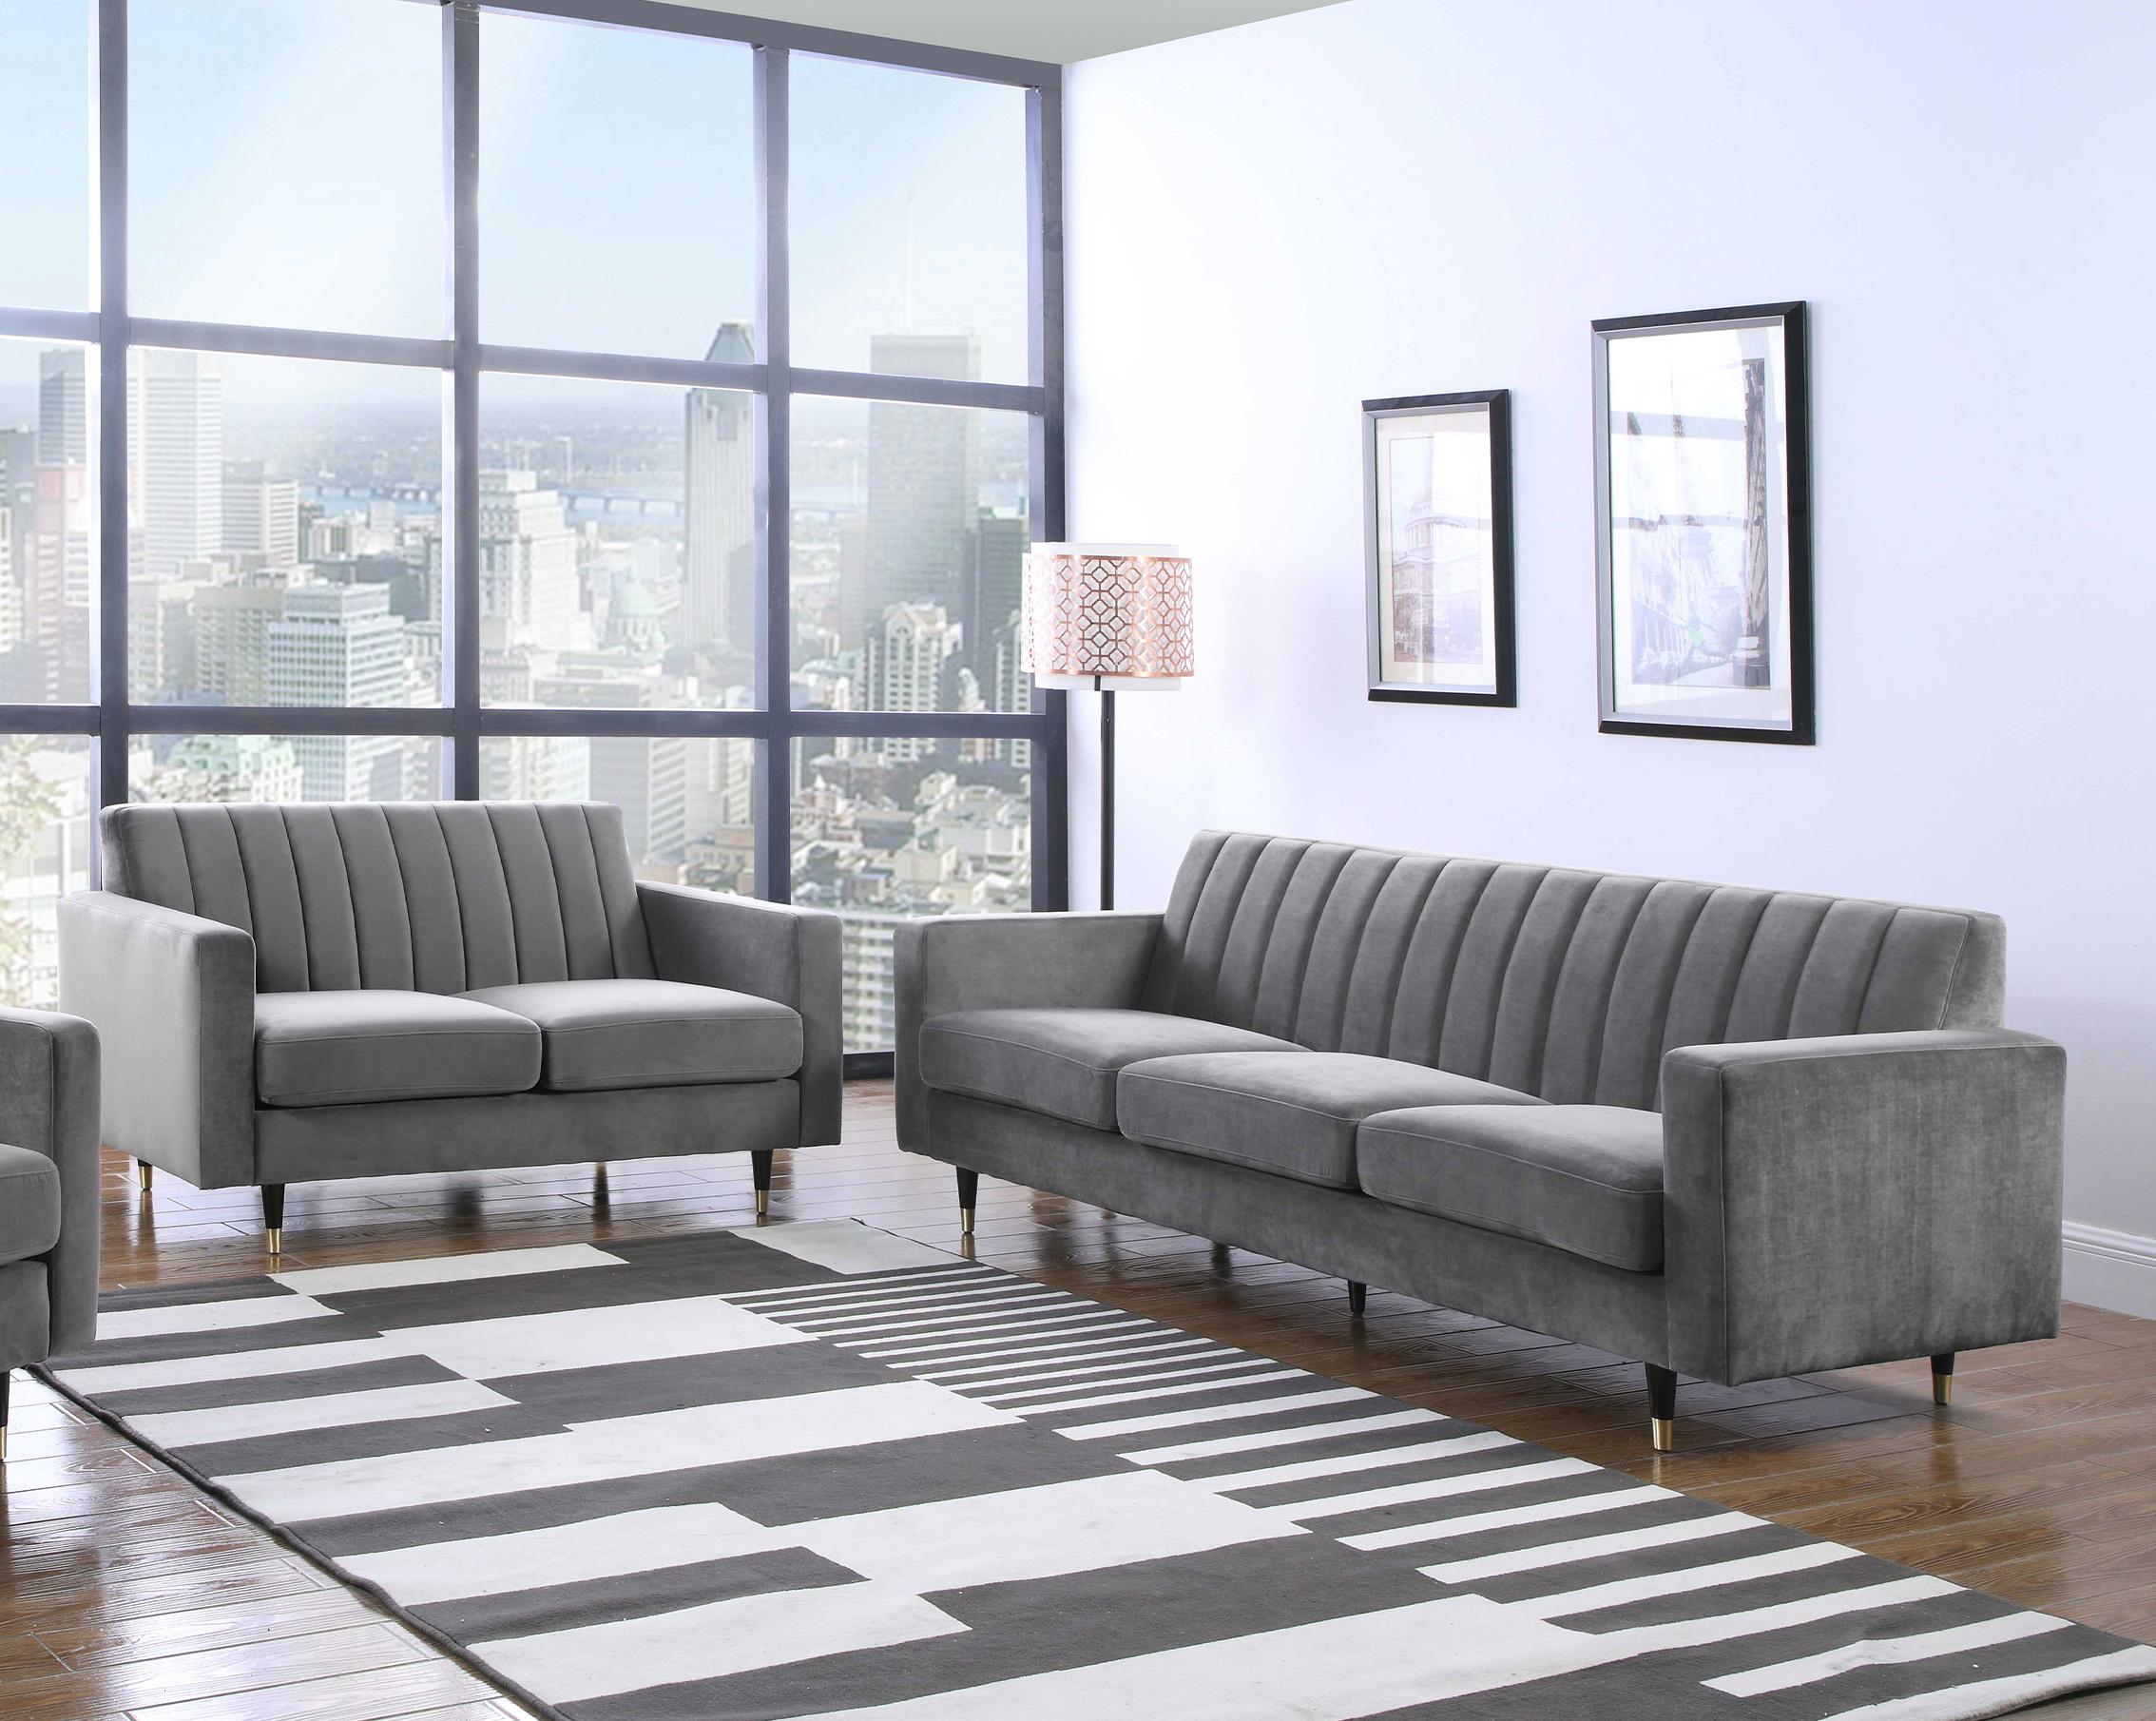 Modern, Classic Sofa Set LOLA 619Grey-S-Set-2 619Grey-S-Set-2 in Gray Velvet